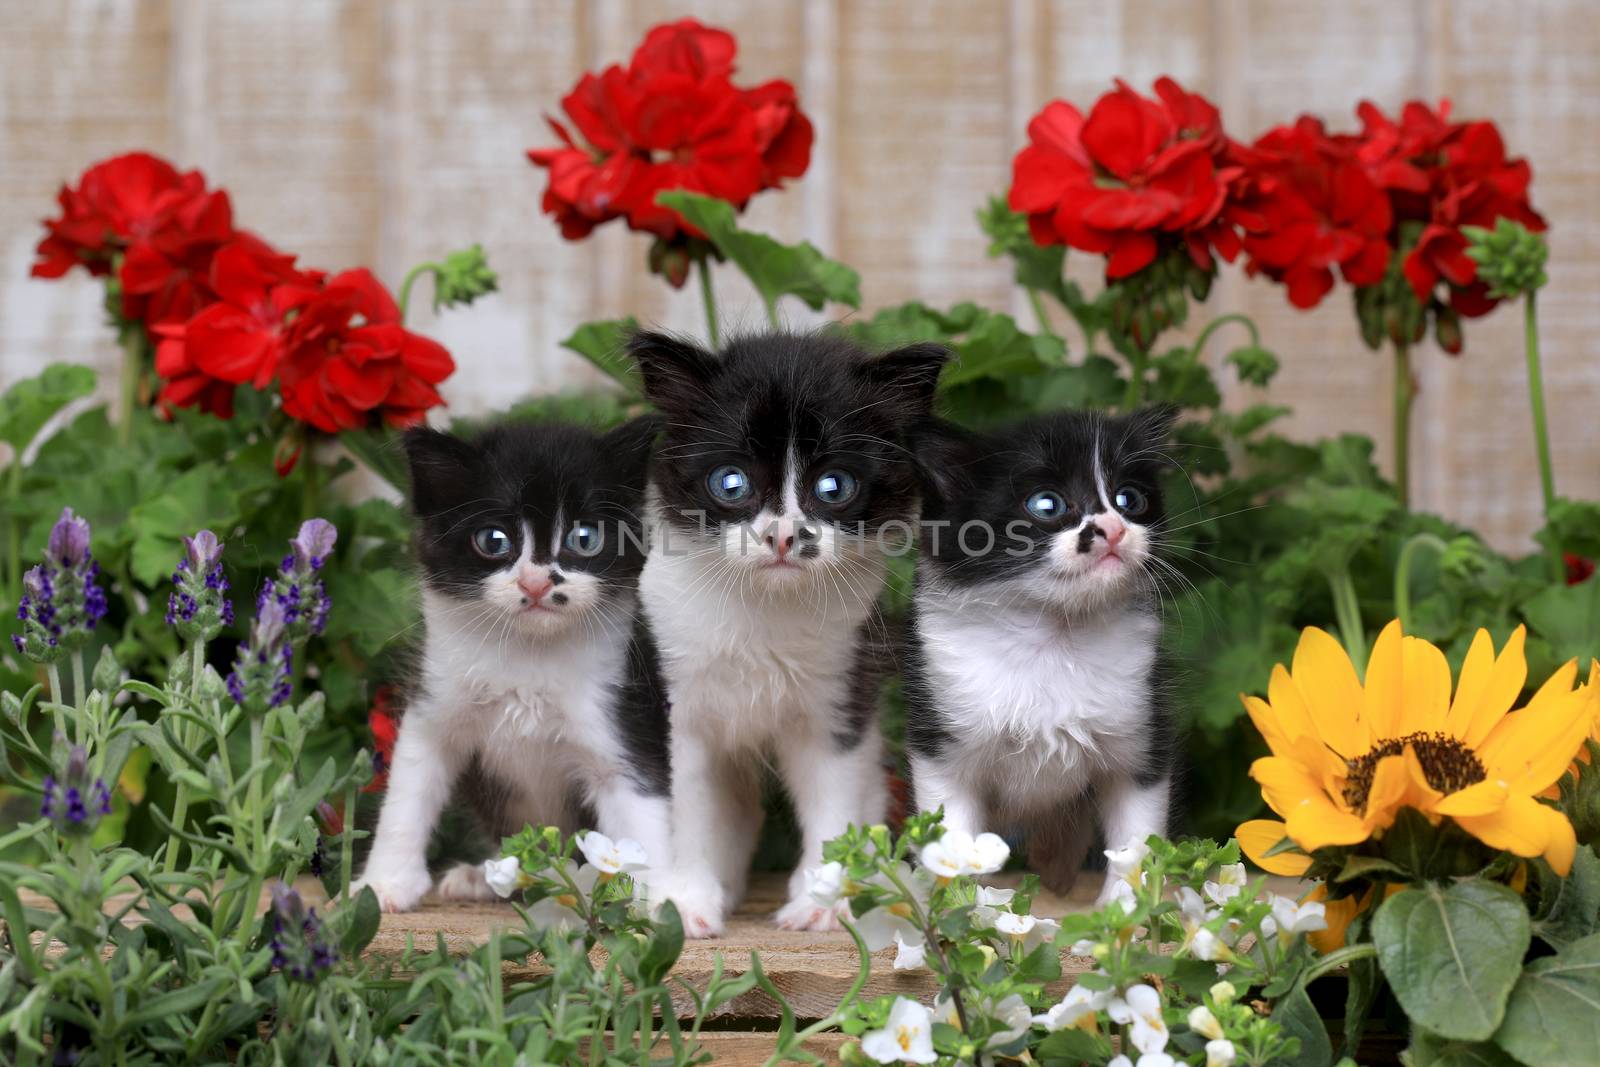 Cute 3 week old Baby Kittens in a Garden Setting by tobkatrina